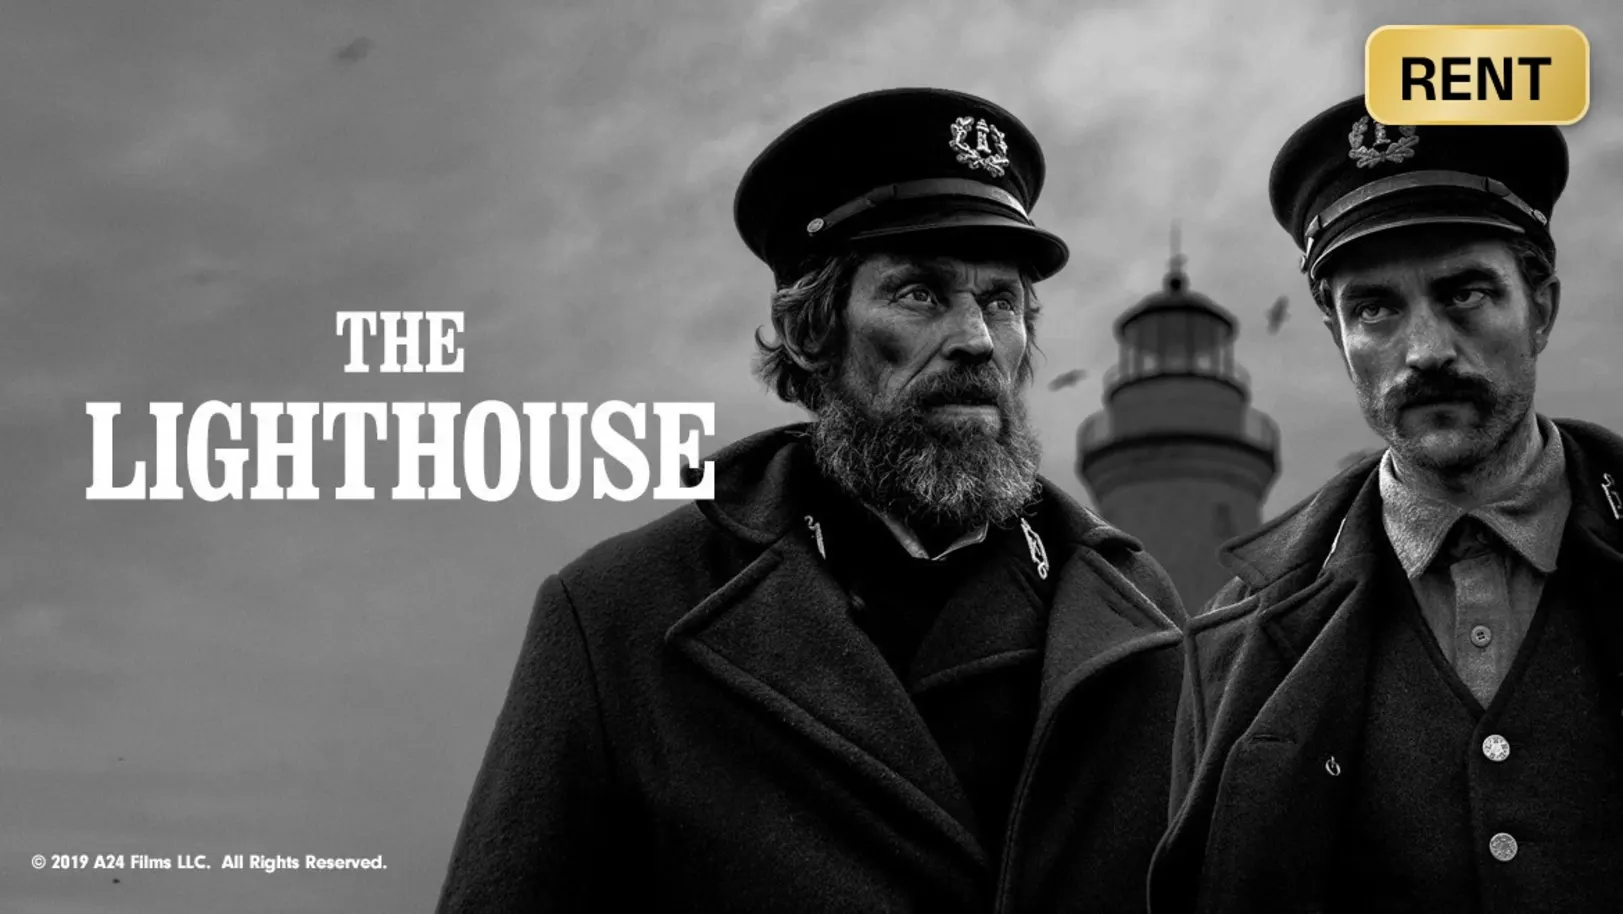 The Lighthouse Movie